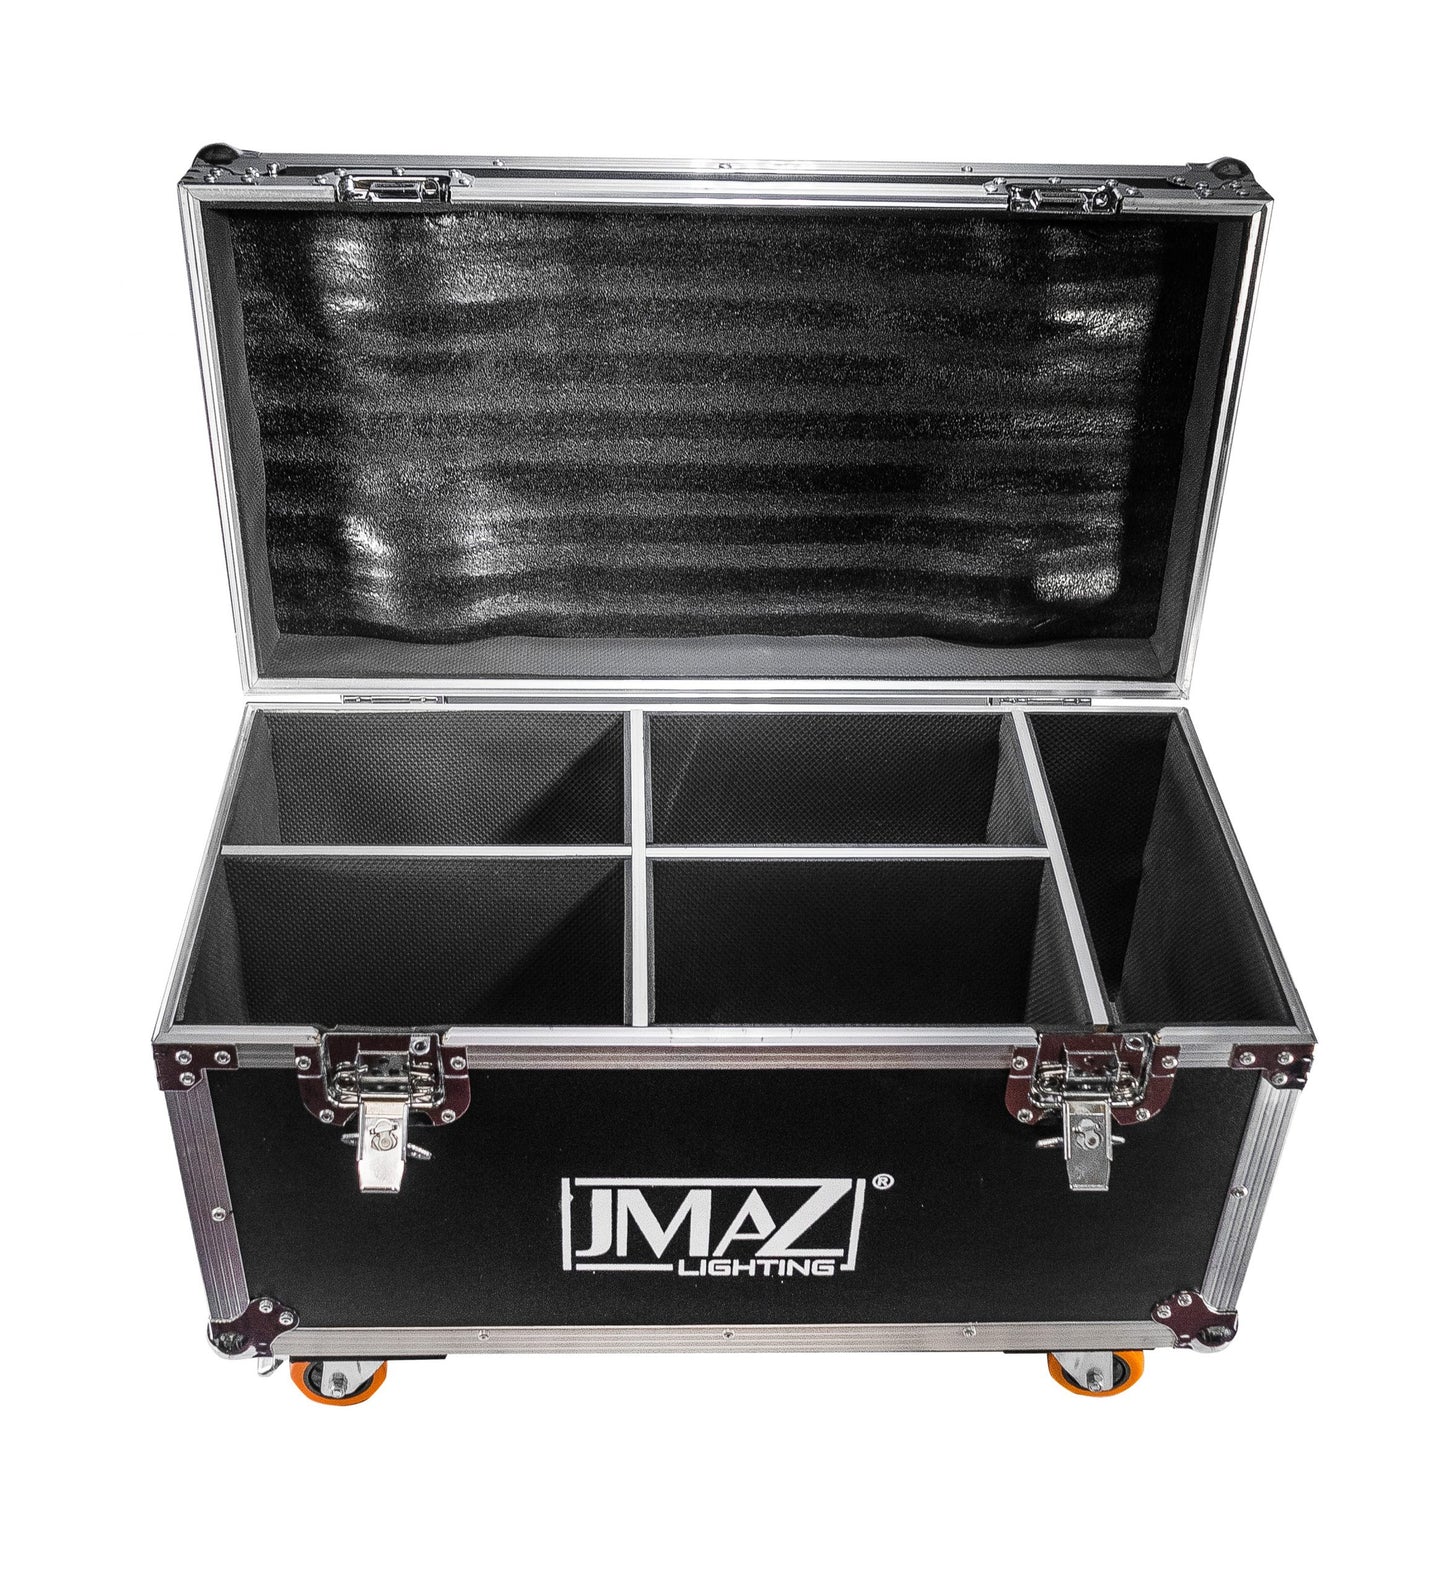 JMAZ 4 Unit Road Case Attco 100 Series